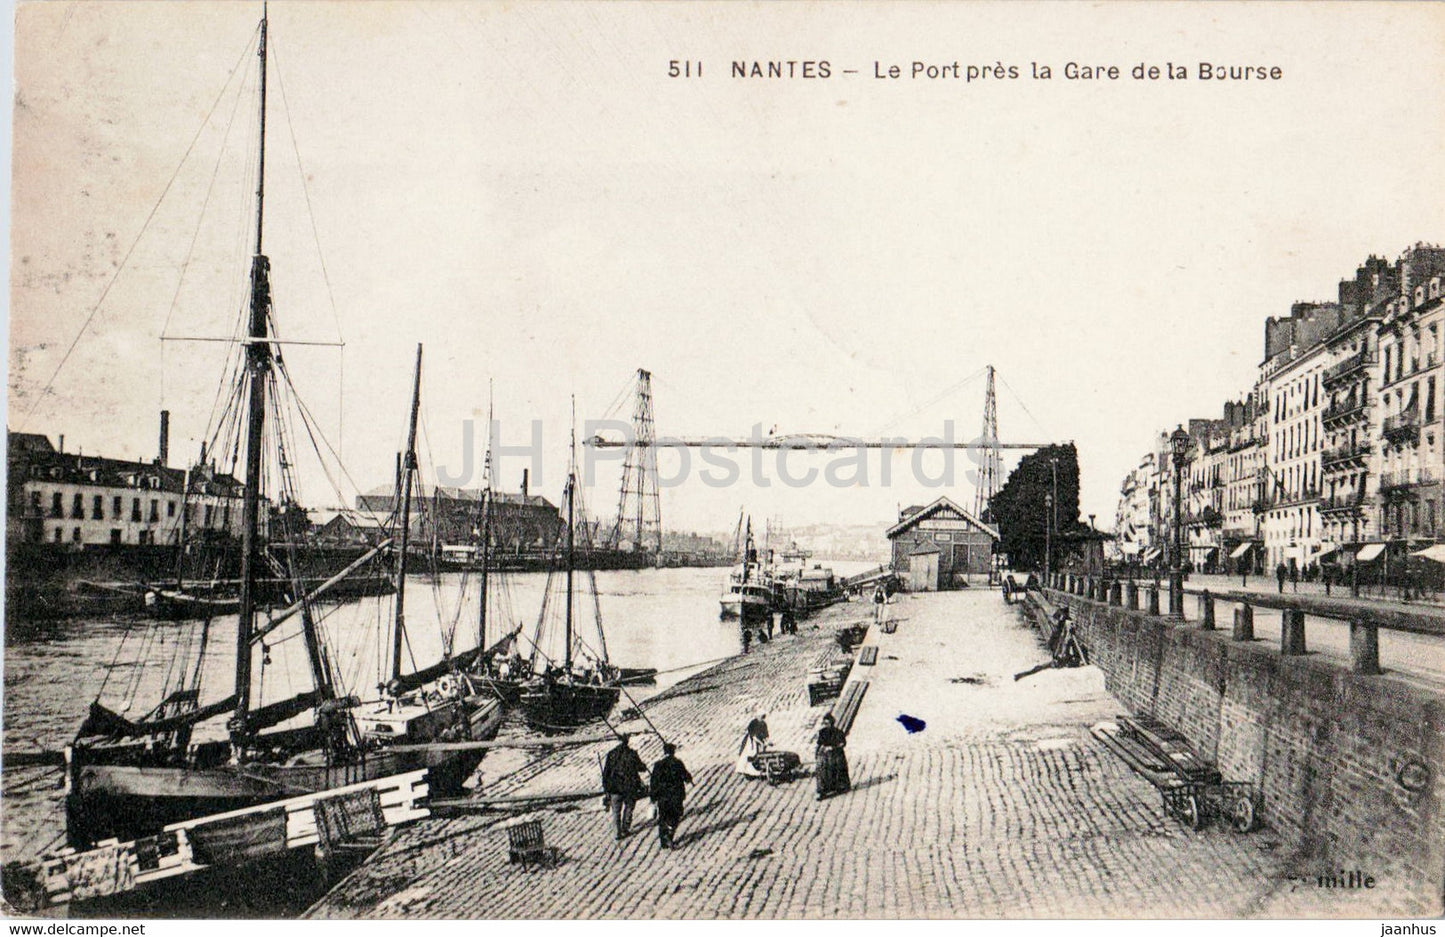 Nantes - Le Port pres la Gare de la Bourse - ship - boat - 511 - old postcard - France - unused - JH Postcards